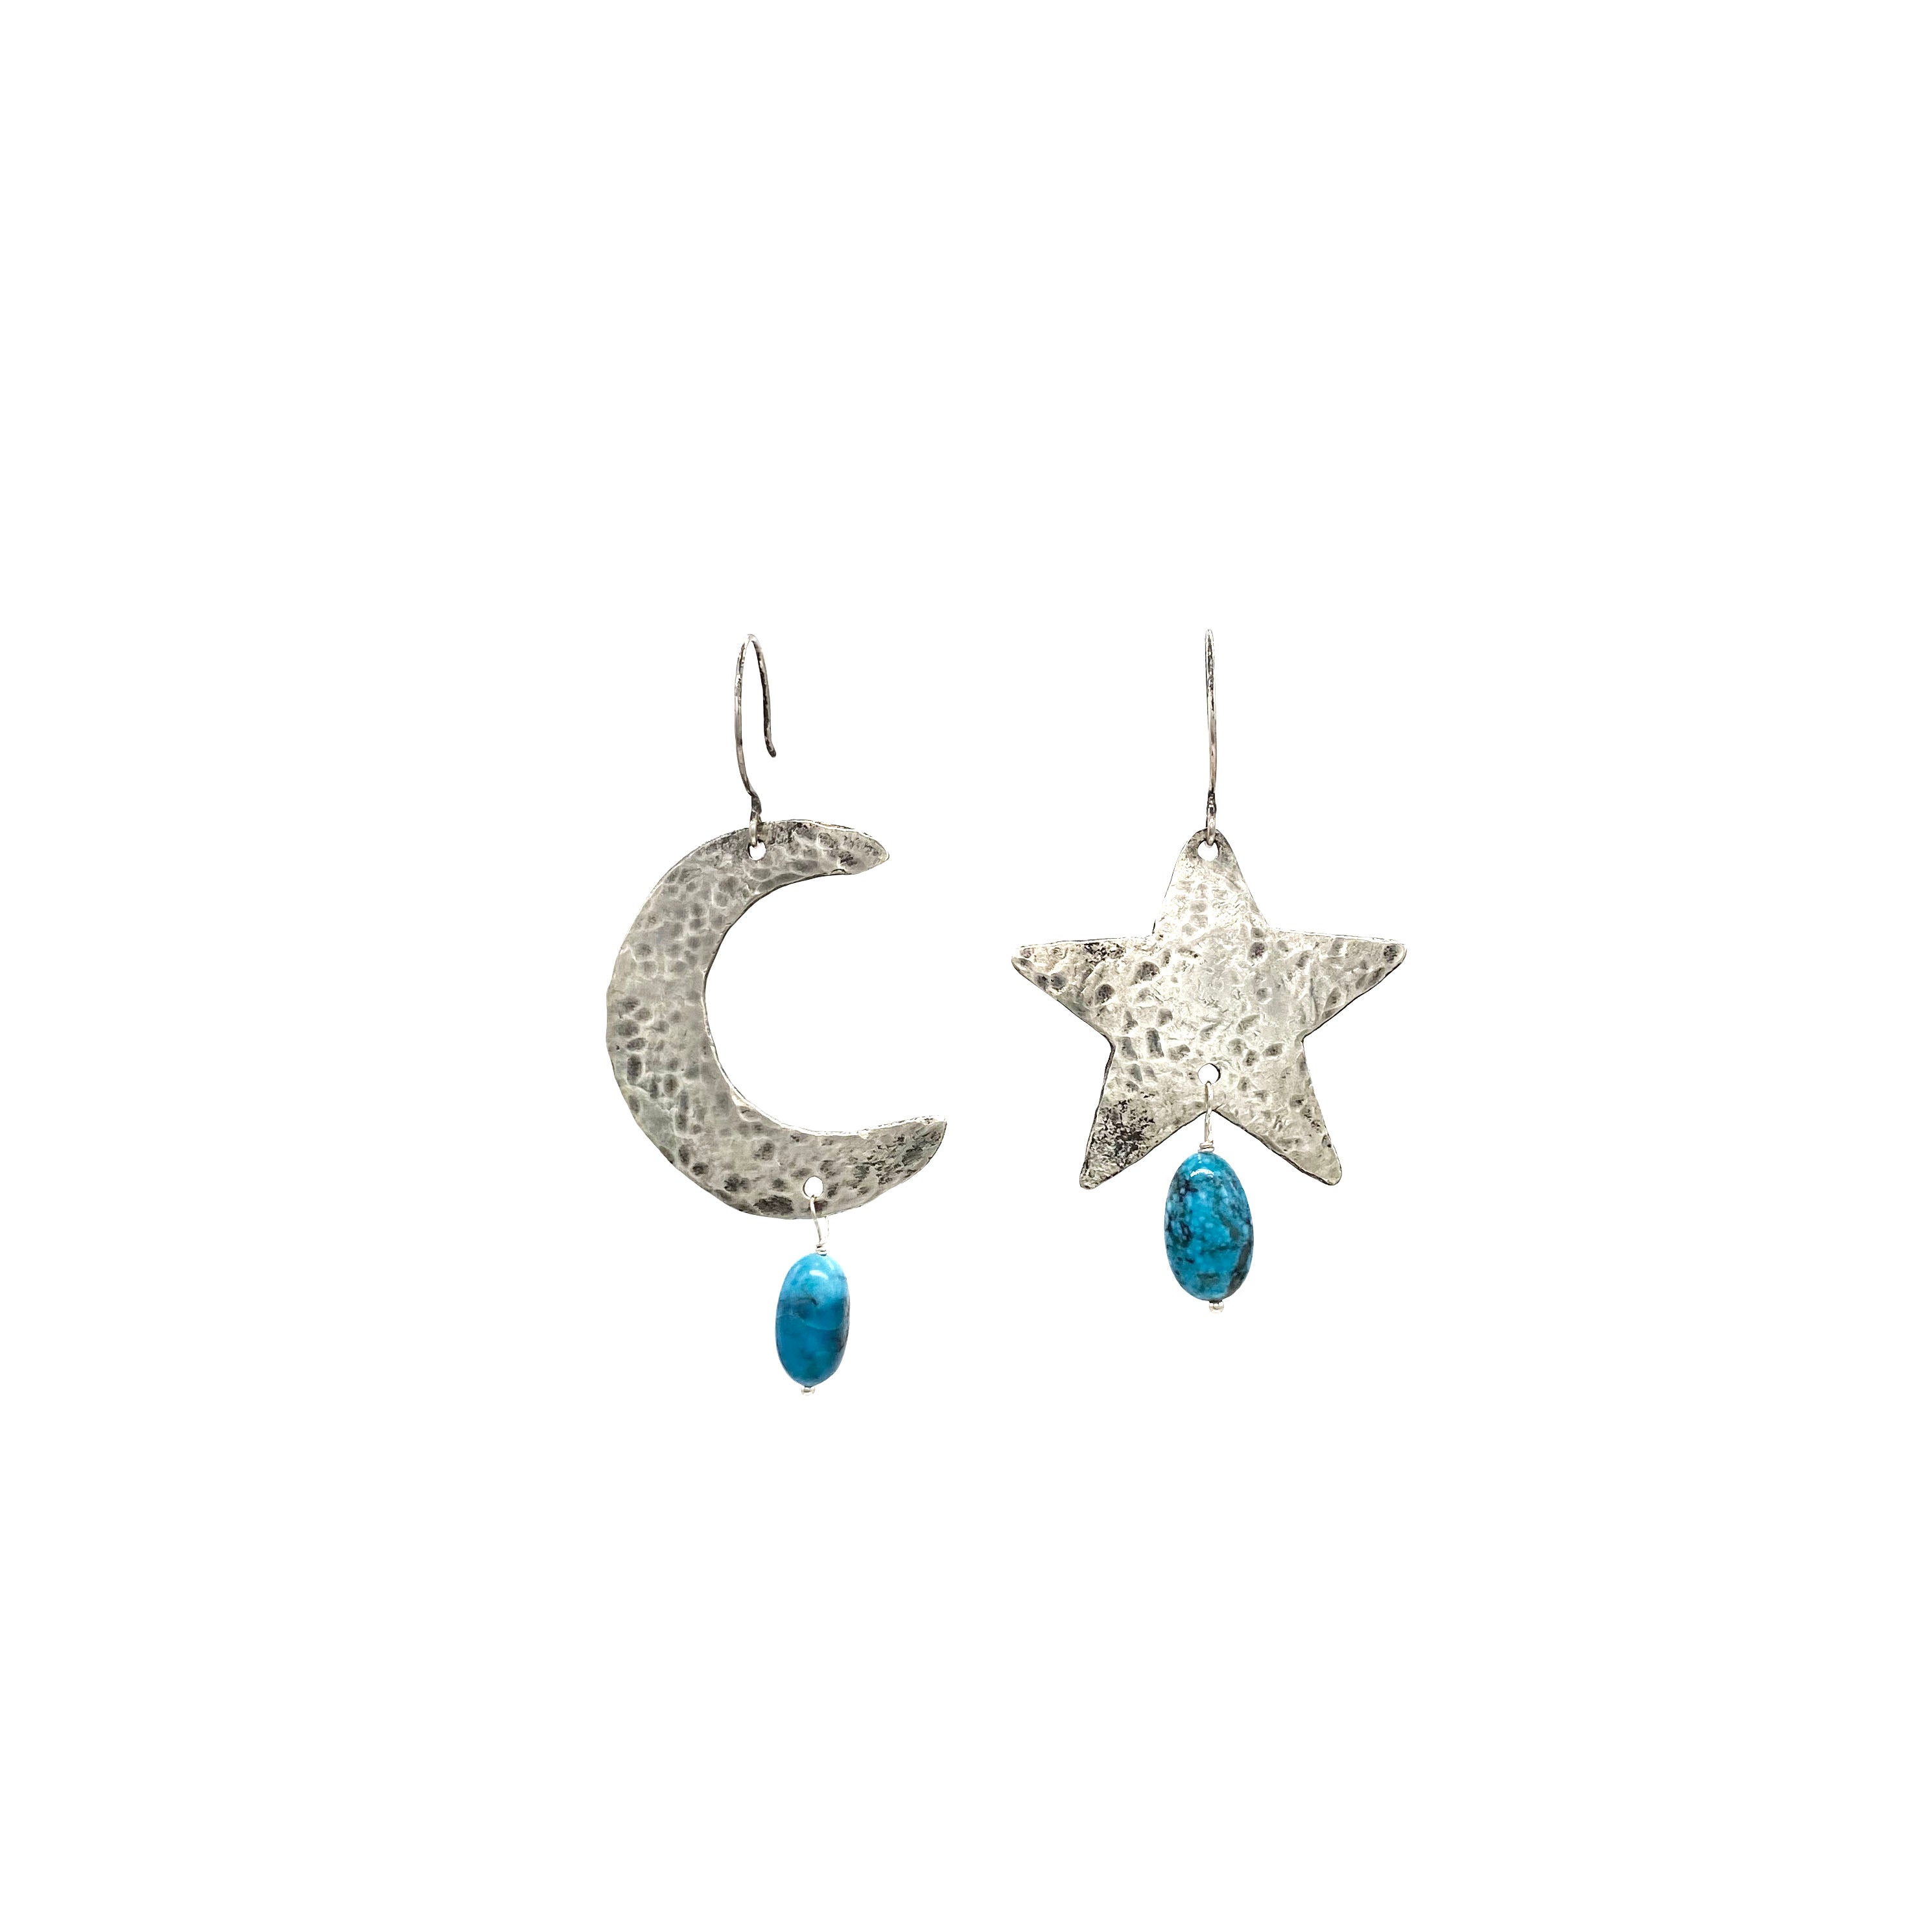 Star and Moon earrings